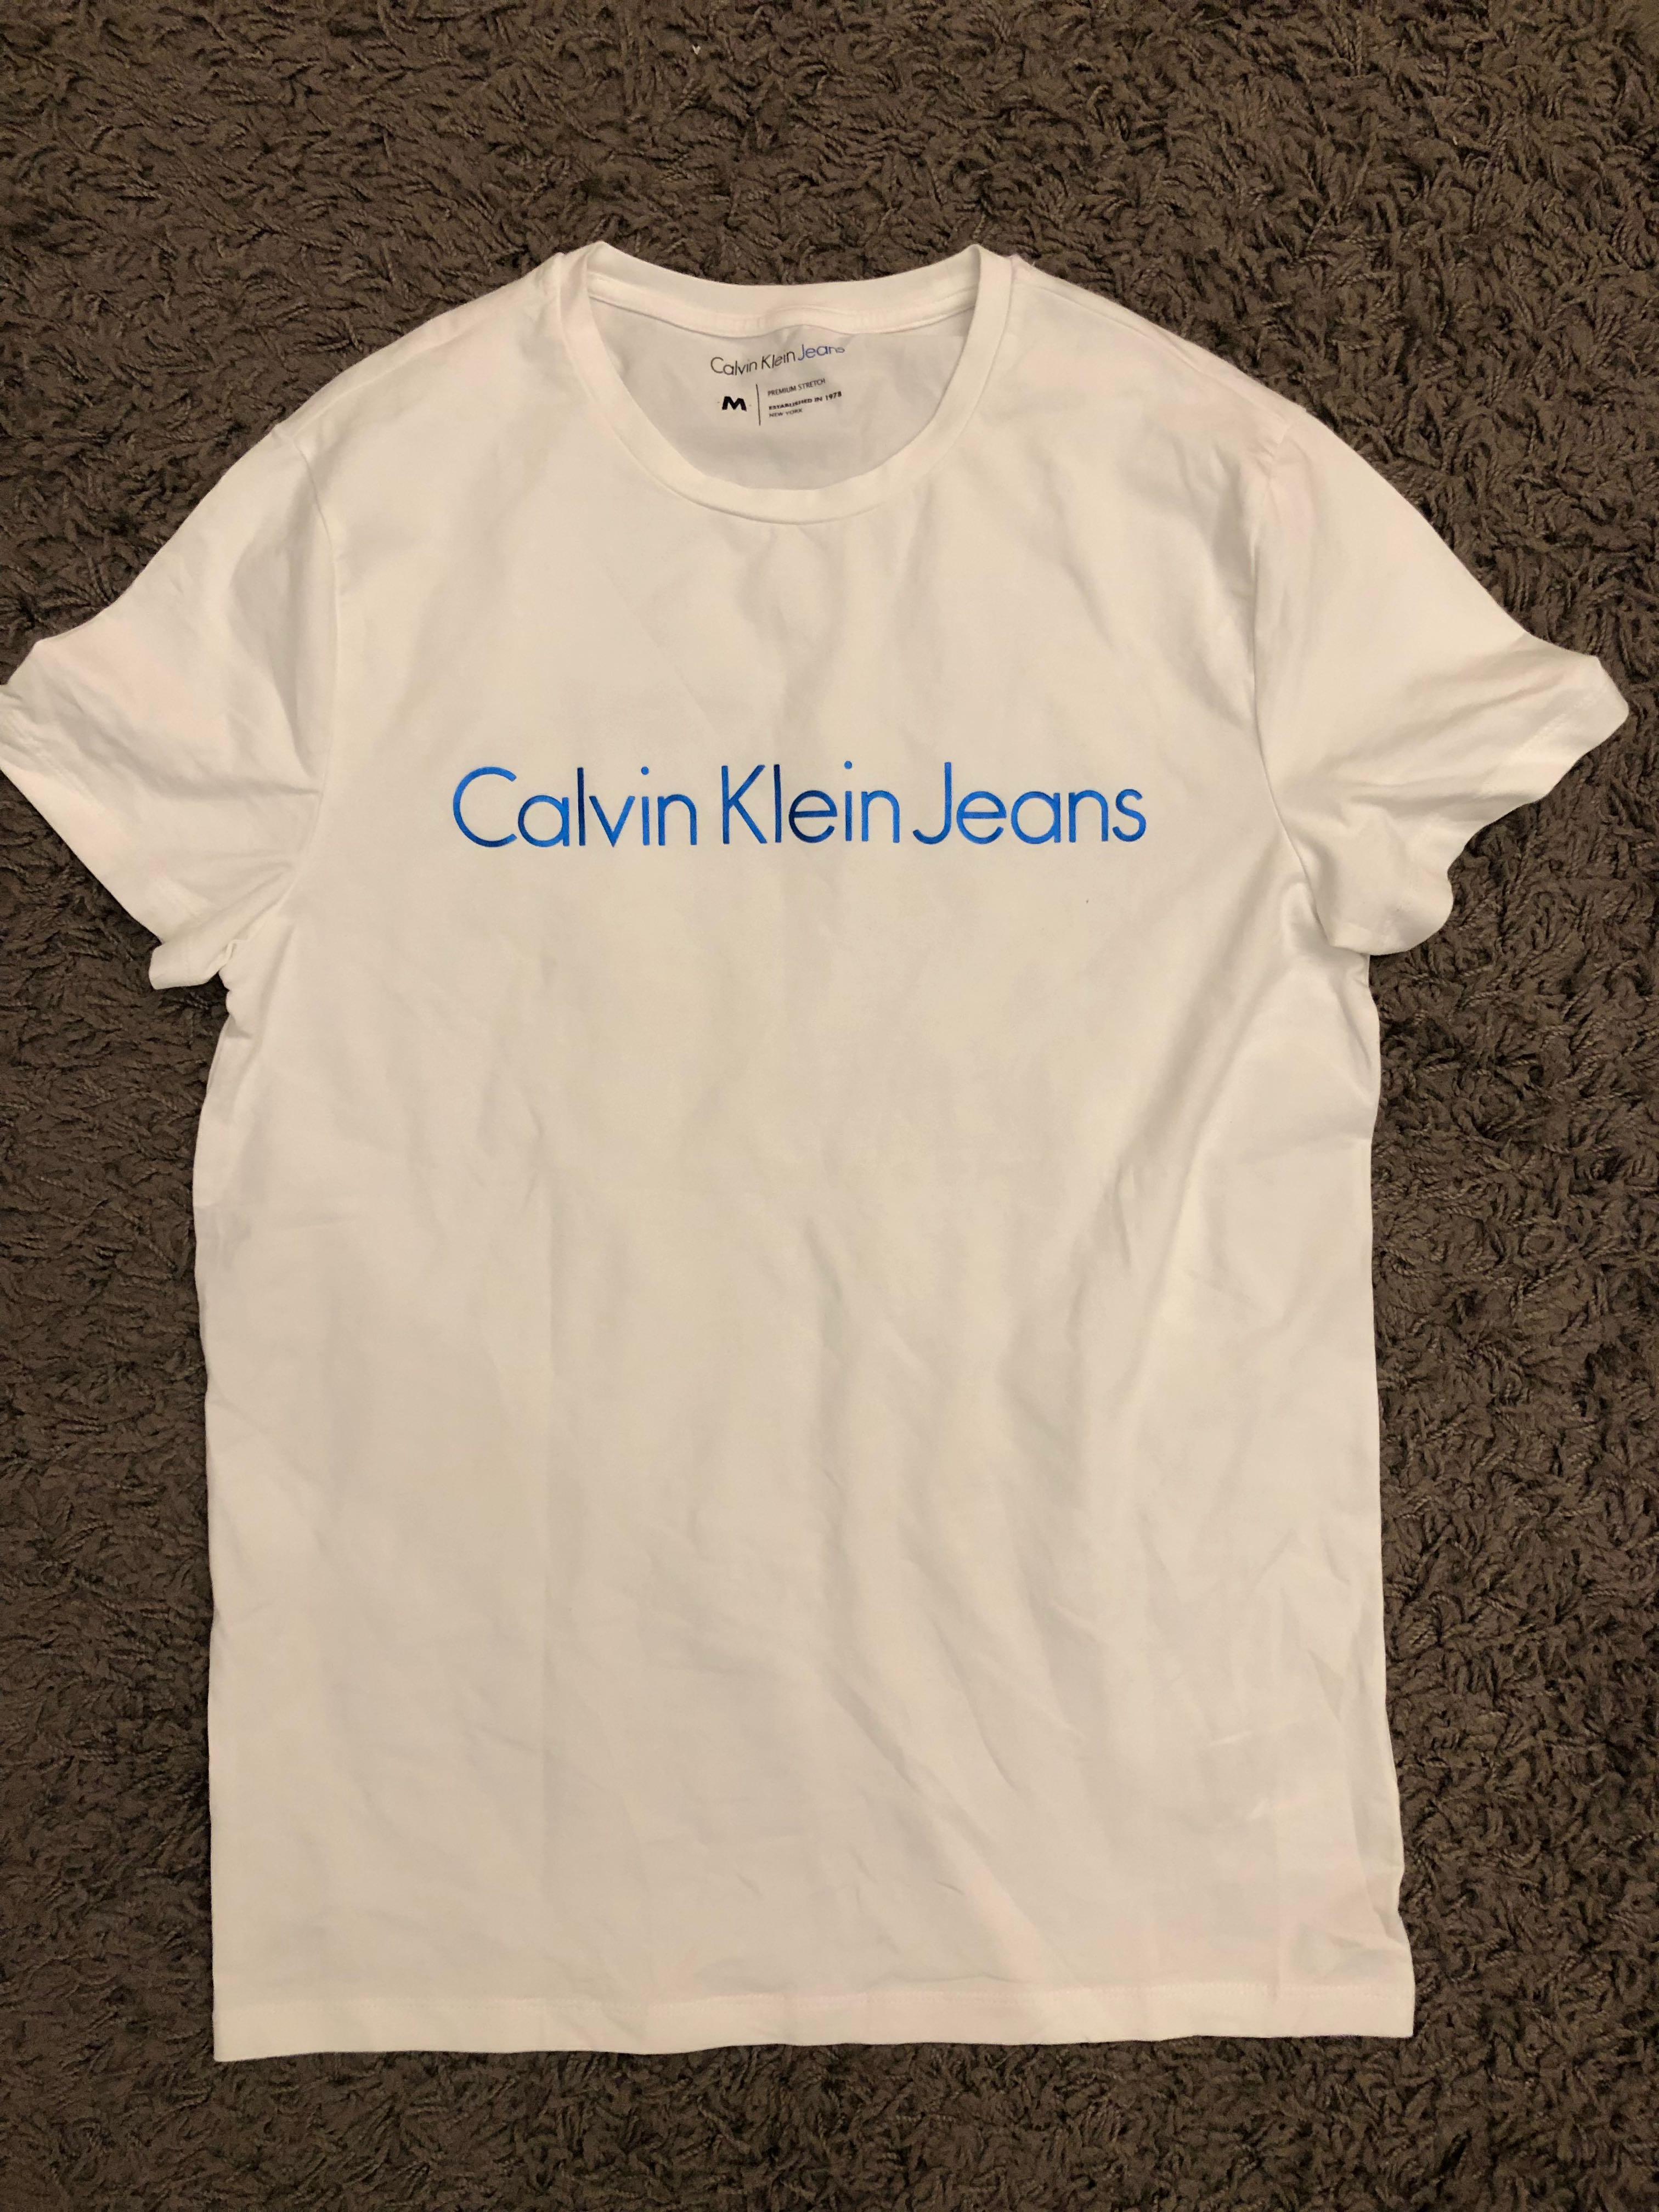 Calvin Klein Jeans White T Shirt For Men, Men'S Fashion, Tops & Sets,  Formal Shirts On Carousell